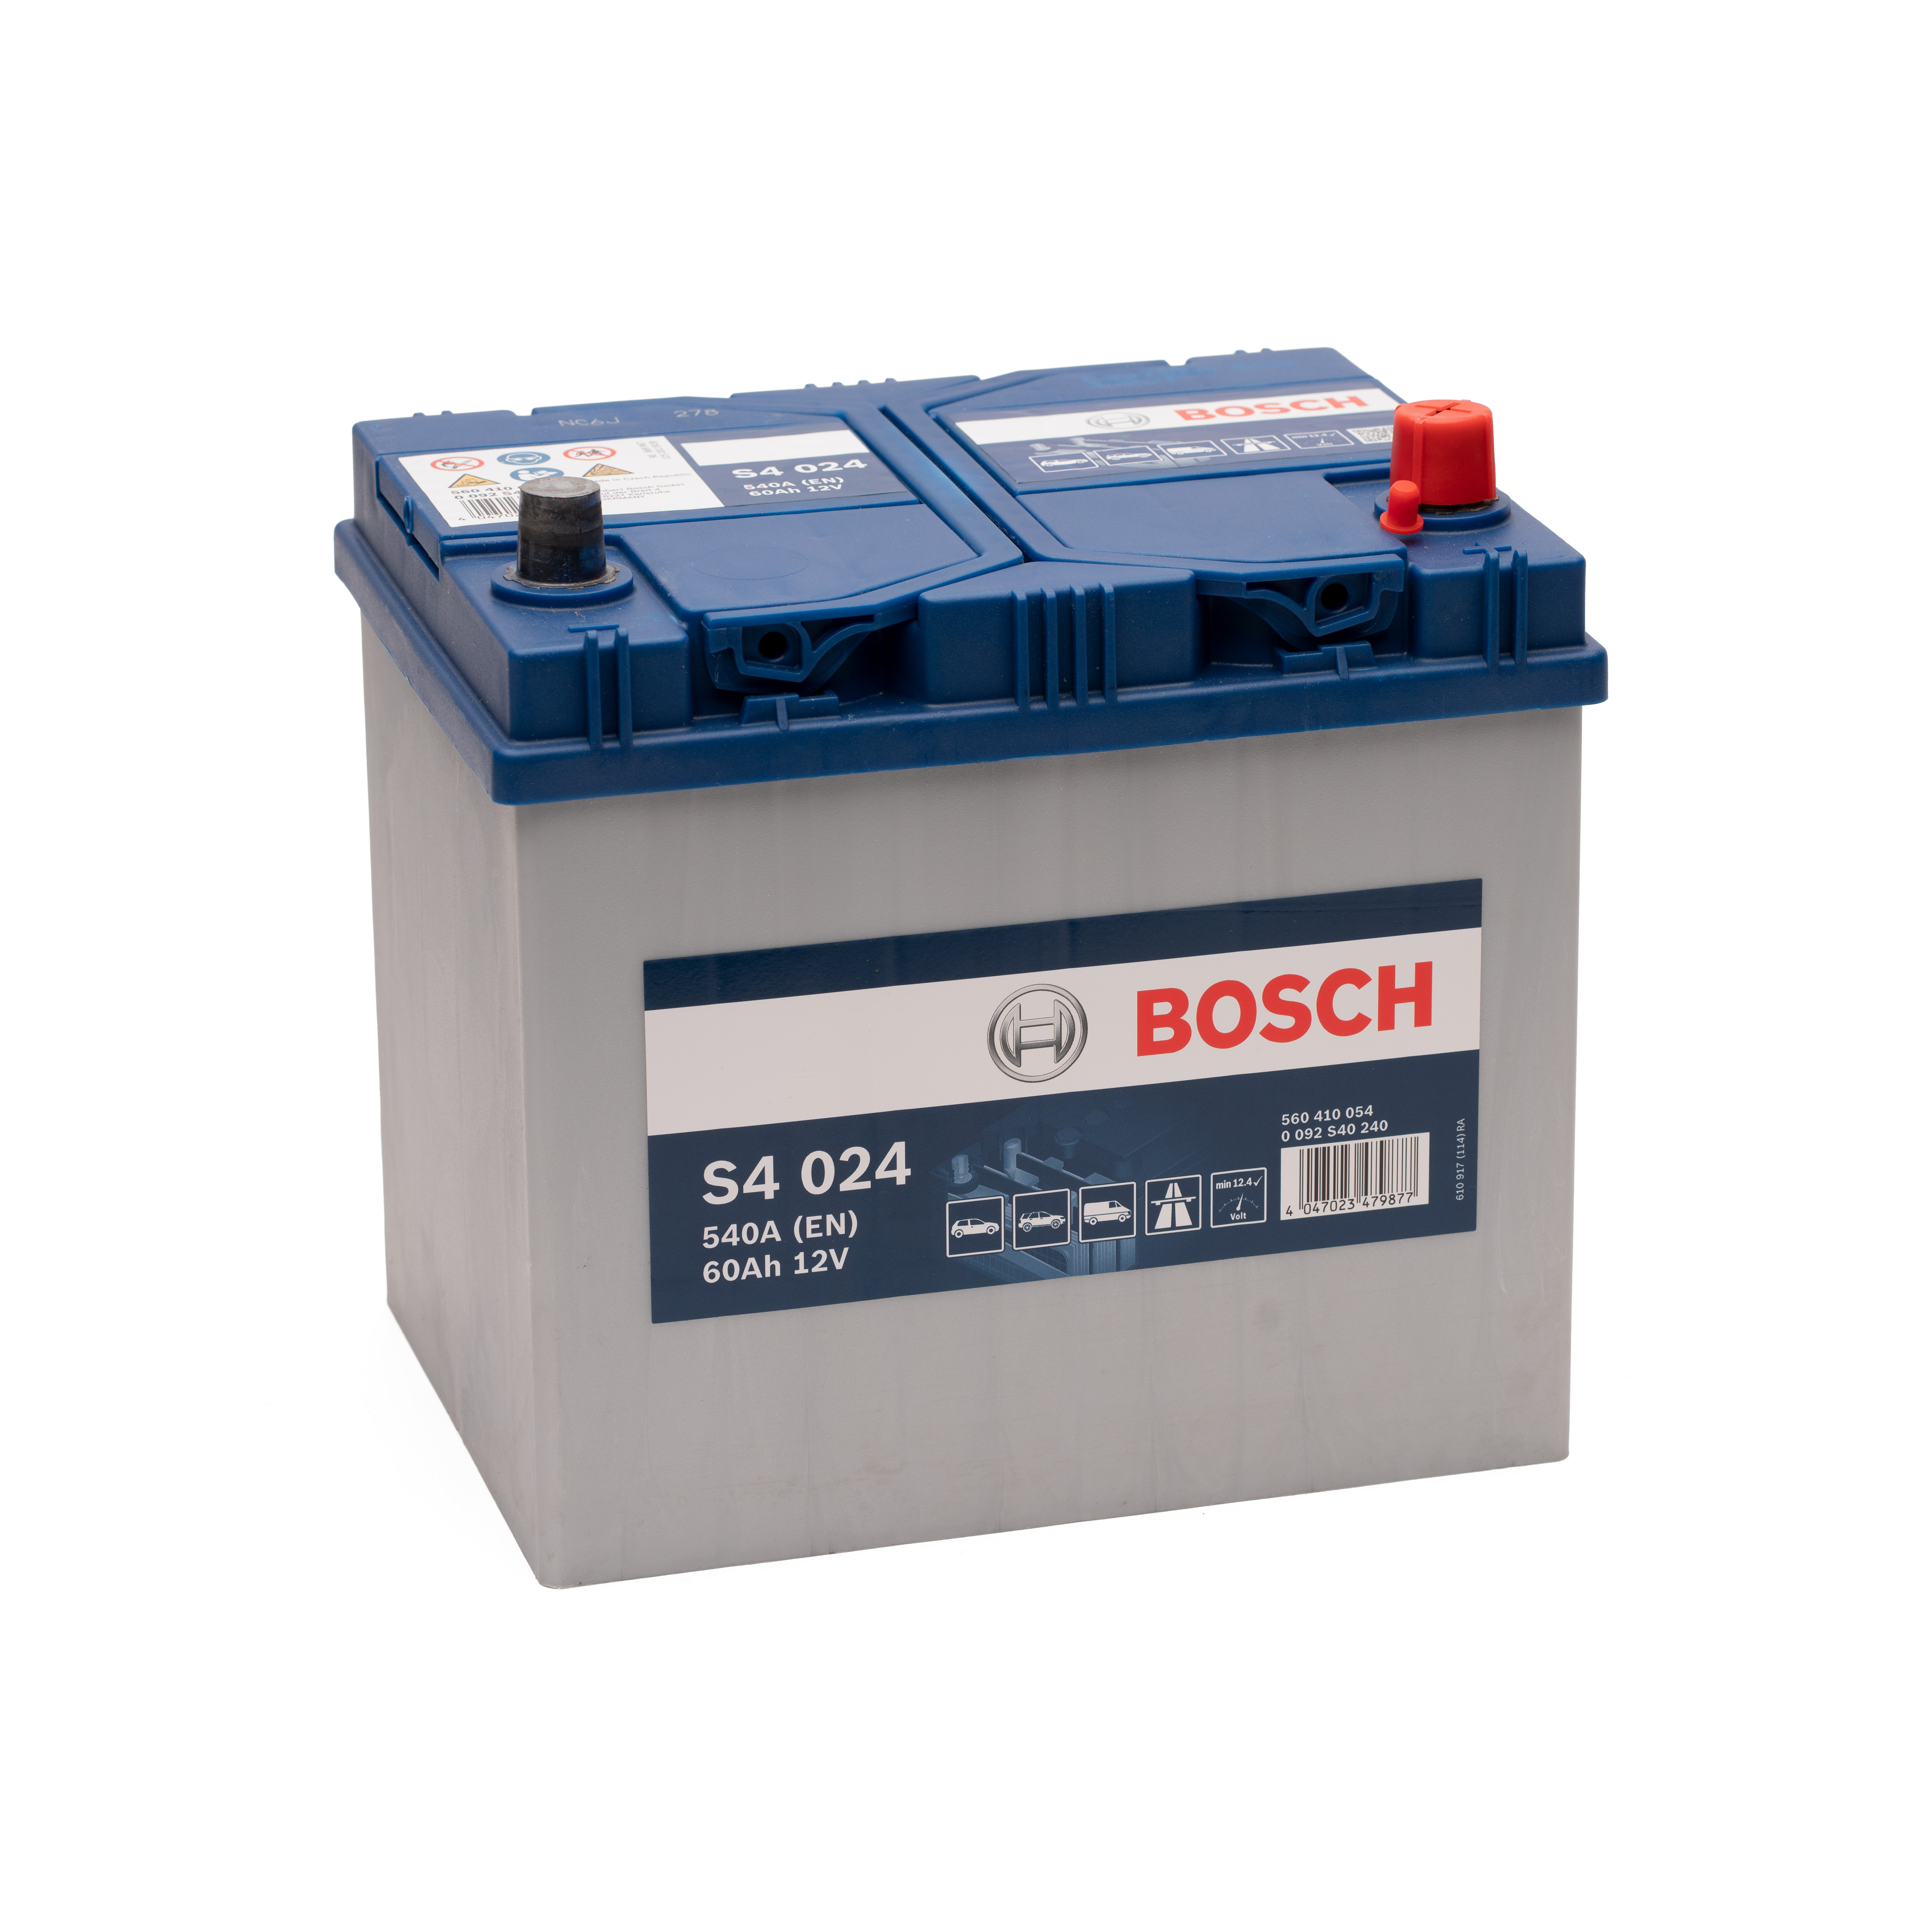 https://swissbatt24.ch/media/image/eb/f0/0a/Bosch-S4-024-60Ah-Autobatterie-560410054.jpg